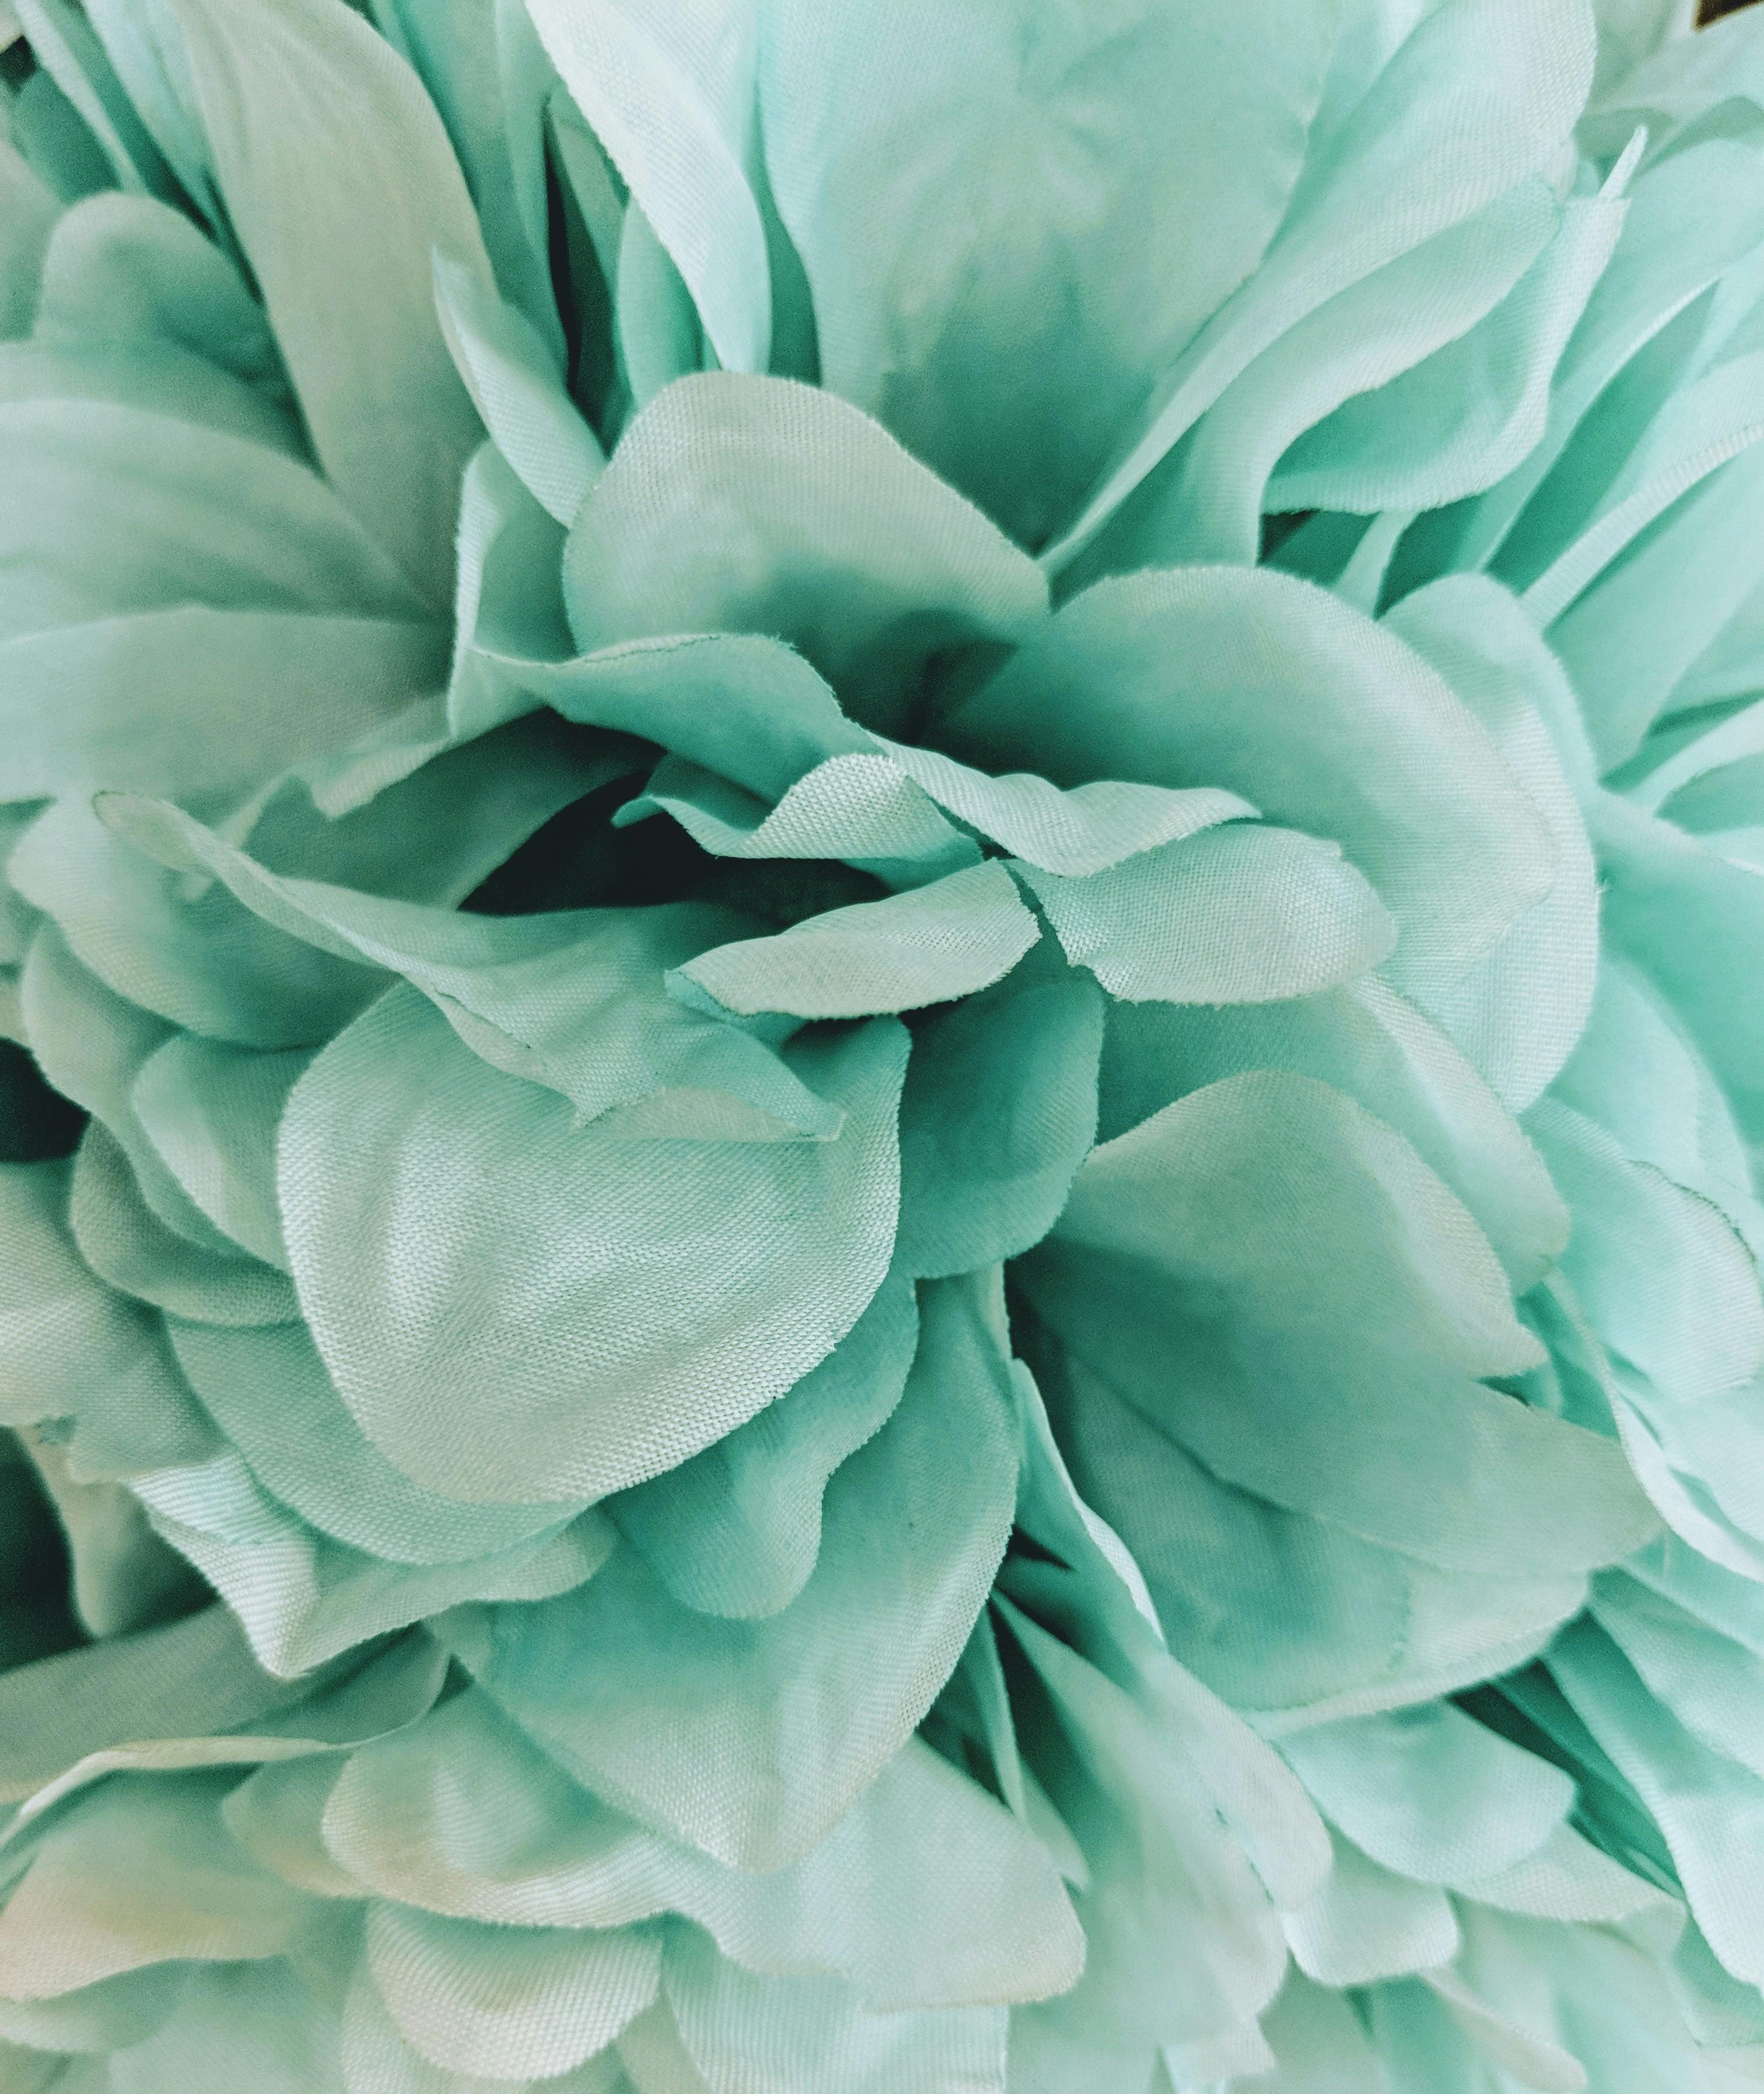 Free stock photo of aqua petals, artificial flowers, blue flowers